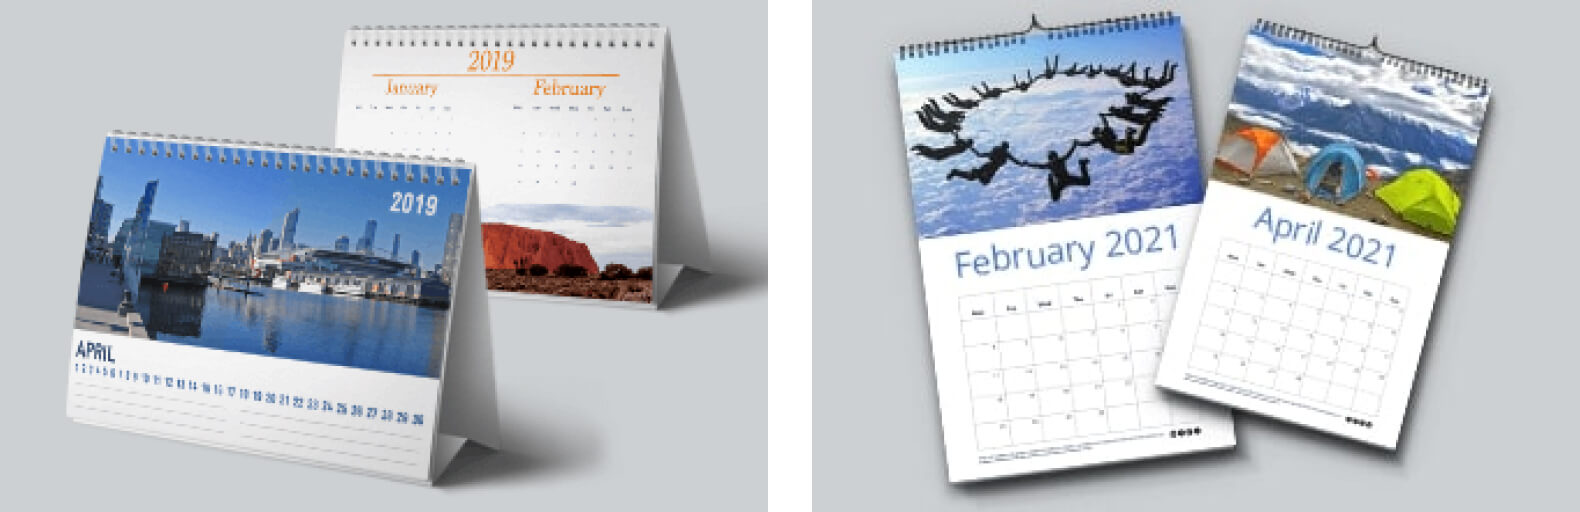 Calendar examples